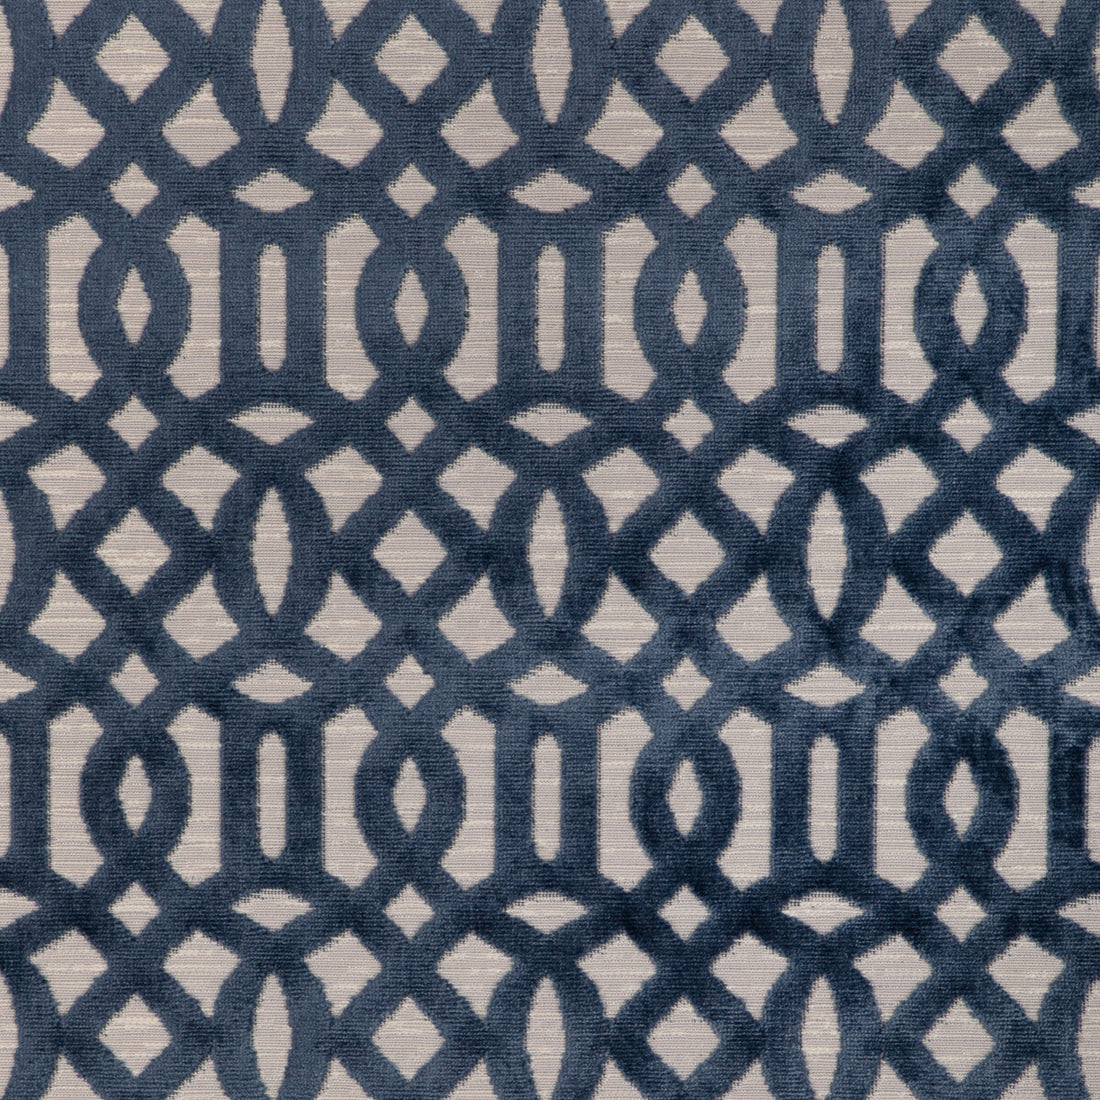 Kravet Design fabric in 37084-5 color - pattern 37084.5.0 - by Kravet Design in the Modern Velvets collection